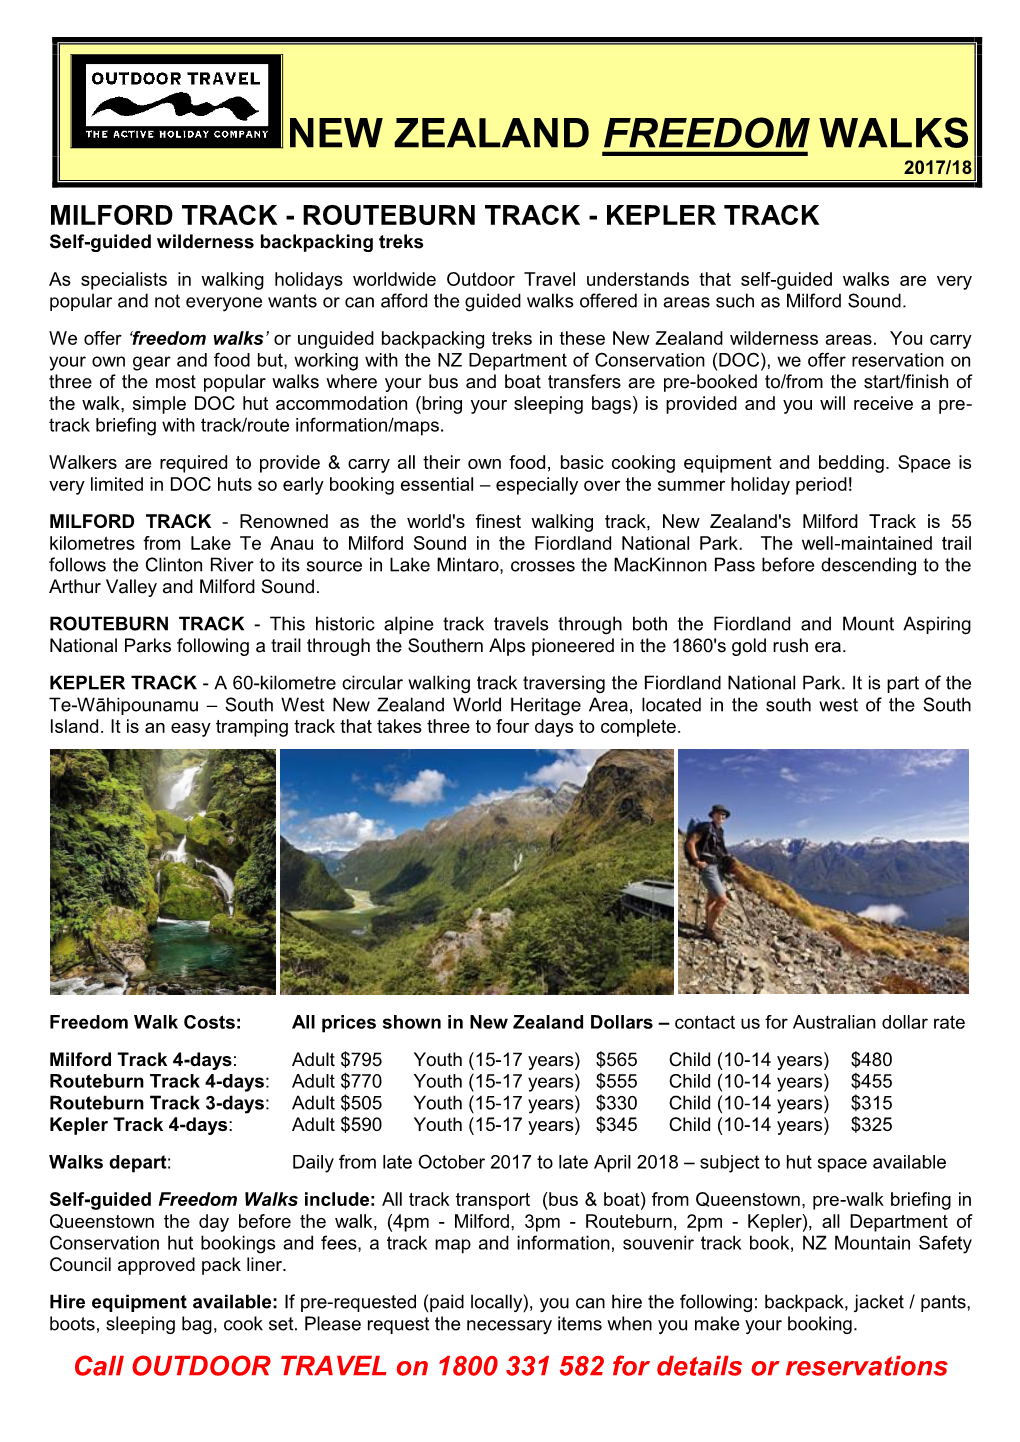 MILFORD TRACK - ROUTEBURN TRACK - KEPLER TRACK Self-Guided Wilderness Backpacking Treks